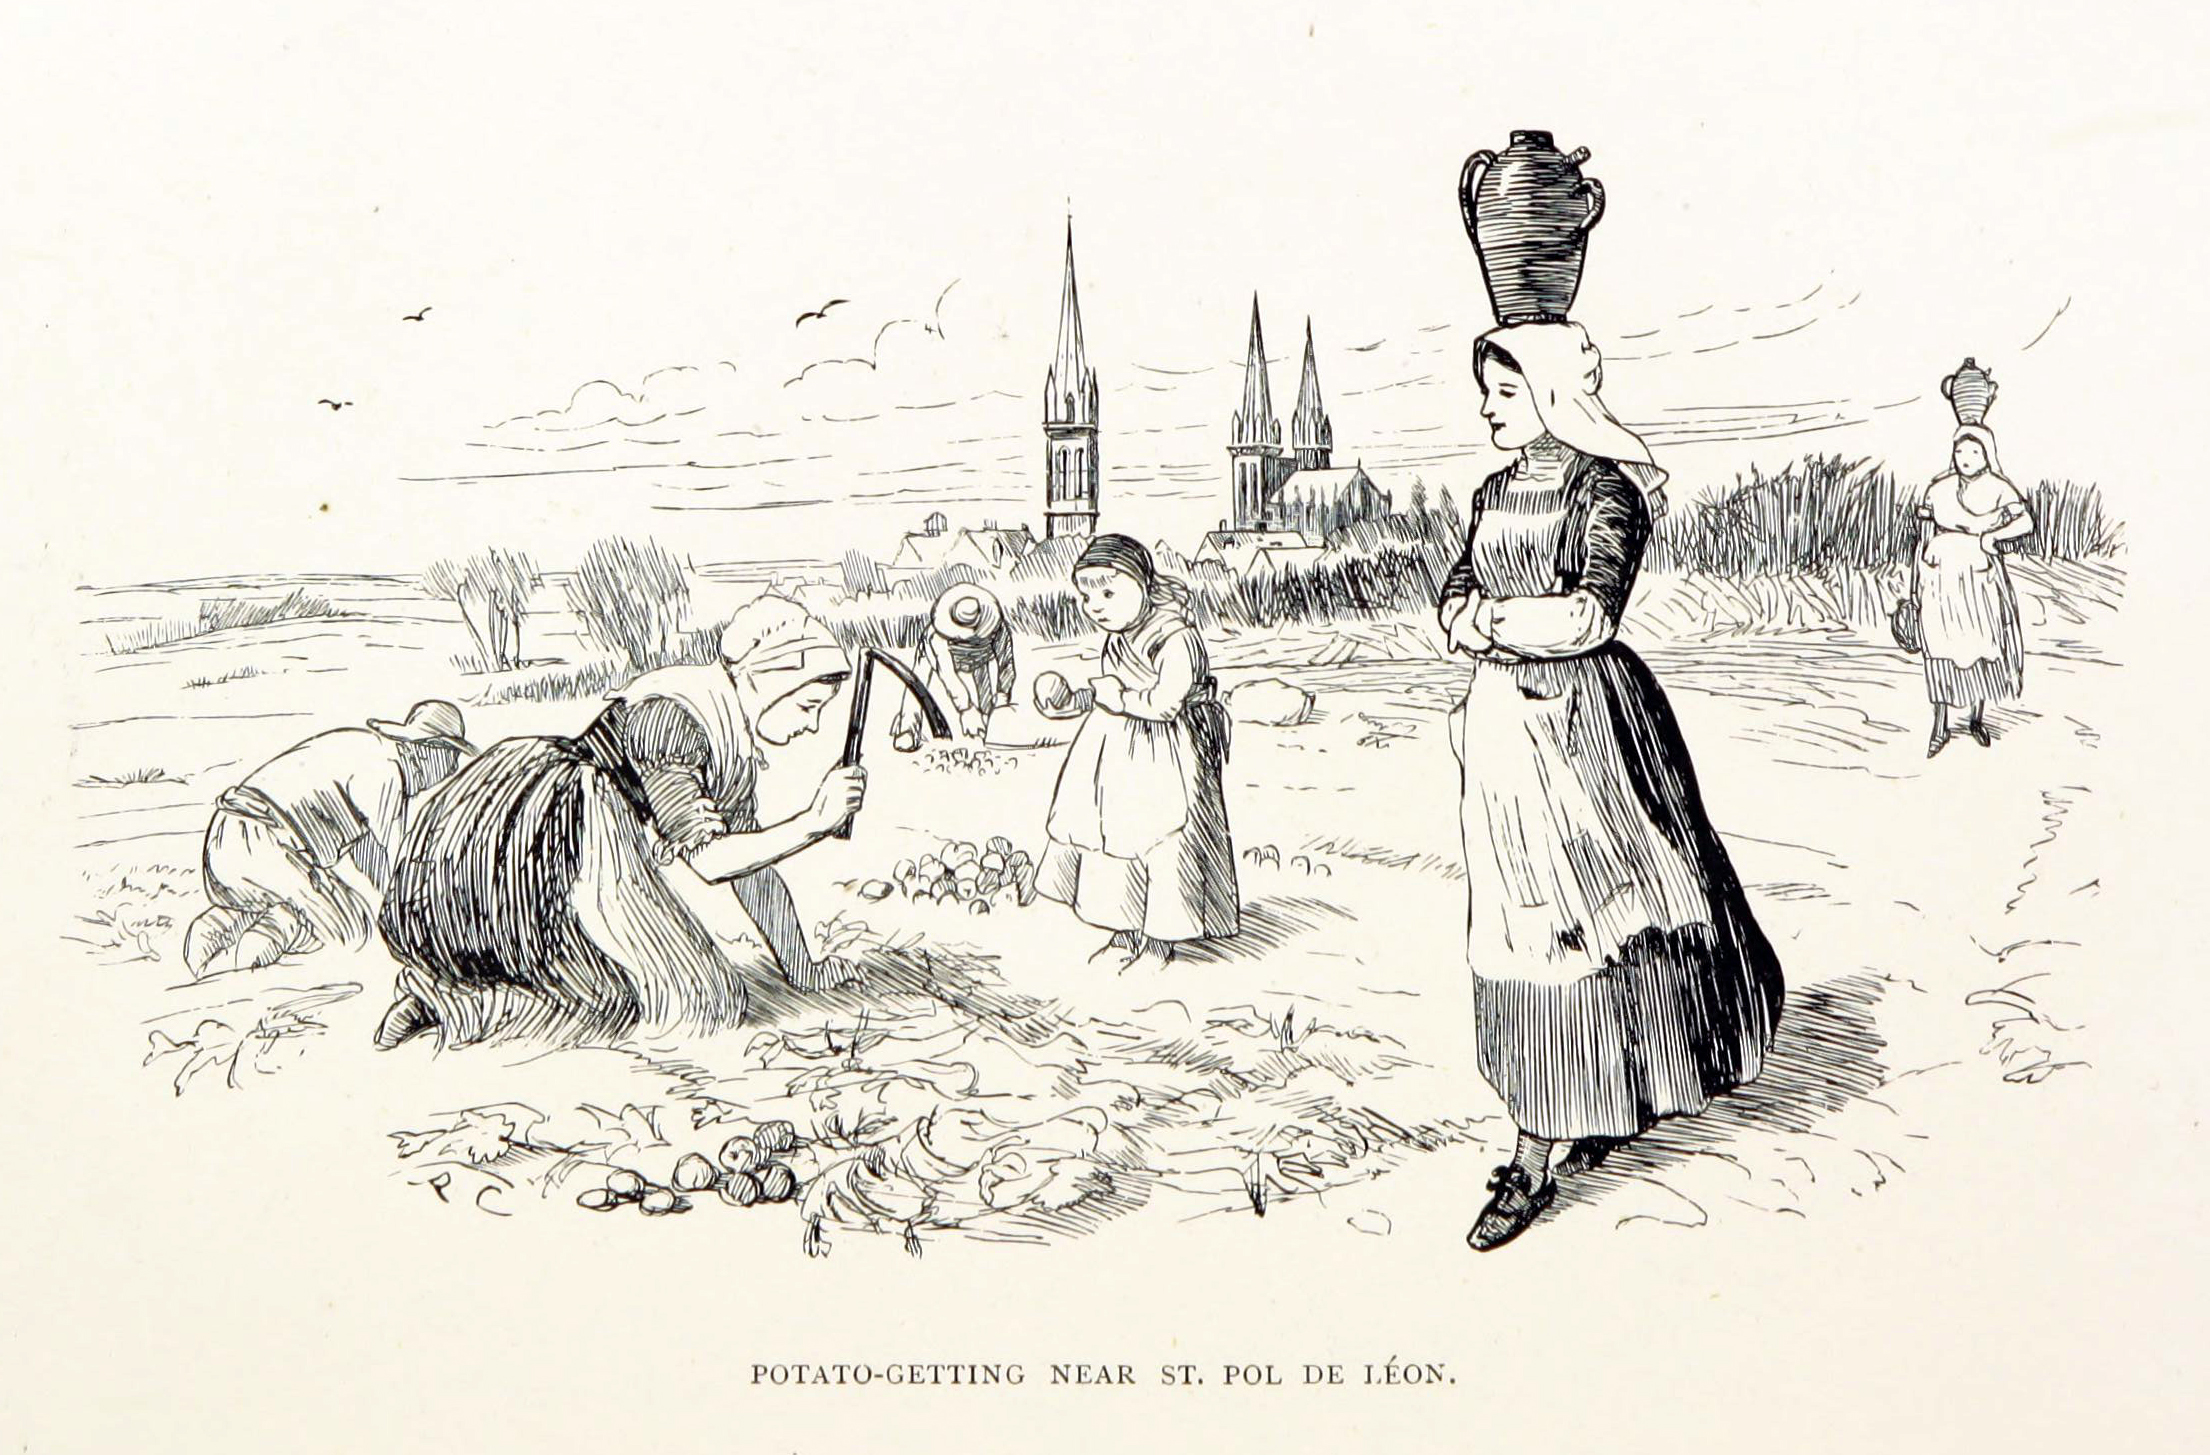 Randolph Caldecott, Potato-Getting Near St. Pol de Léon, from Breton Folk (1881), p. 74